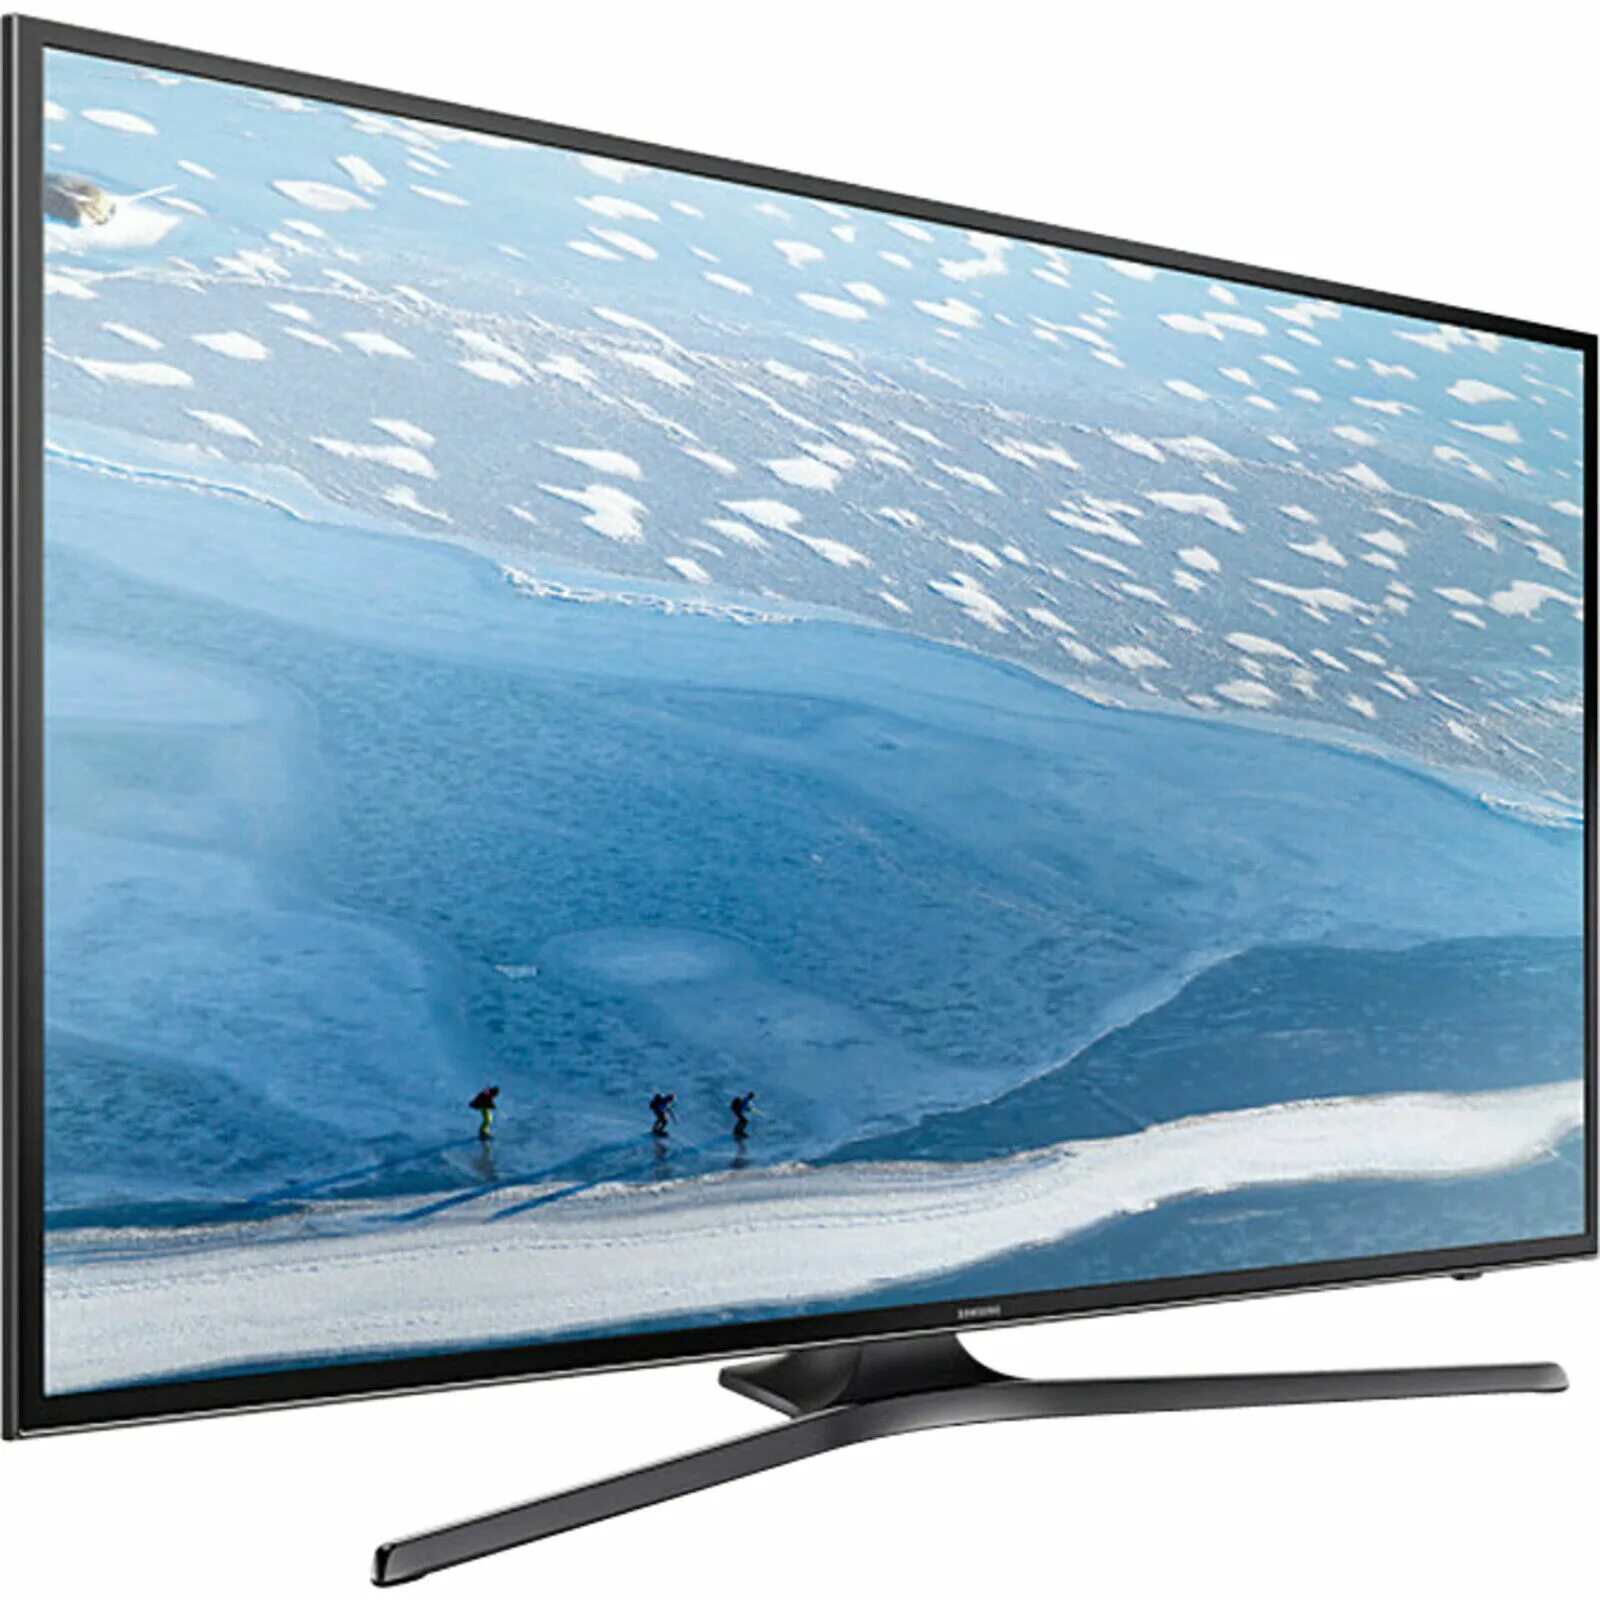 Купить телевизор в подольске. Samsung ue50ku6000u. Samsung ue55ku6400u. Телевизор Samsung ue55ku6000. Телевизор Samsung ue49ku6400u 49" (2016).